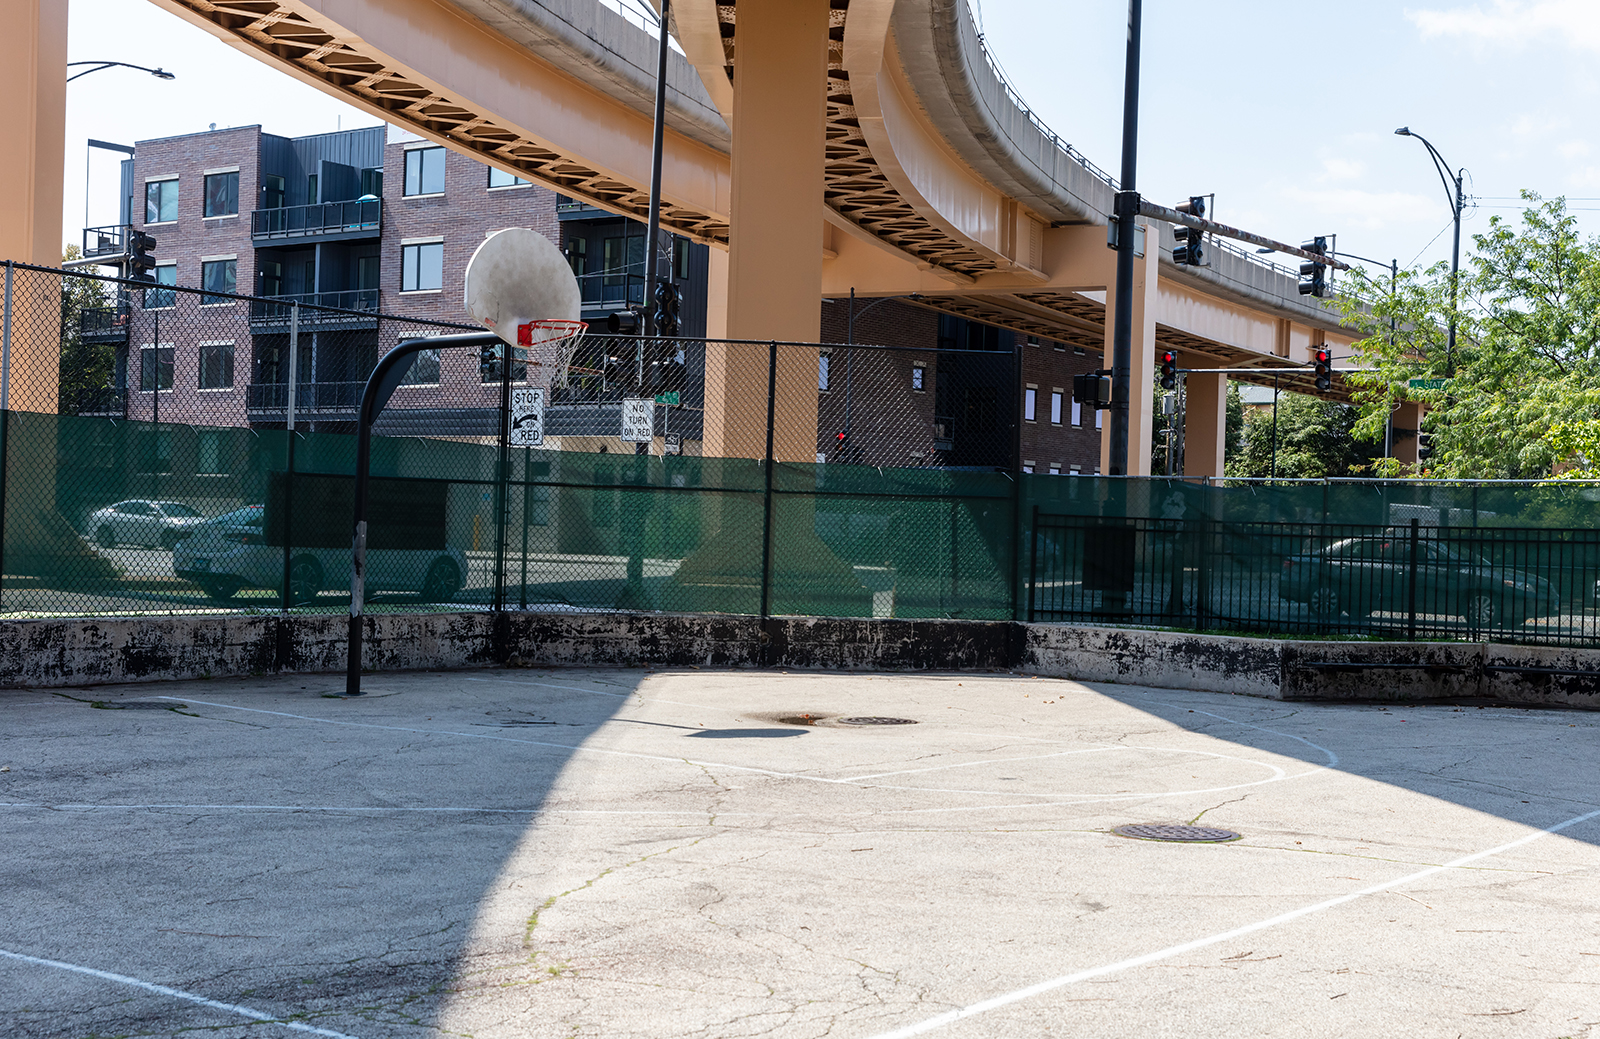 Margaret Hie Ding Lin Park basketball courts under the 'L' train tracks